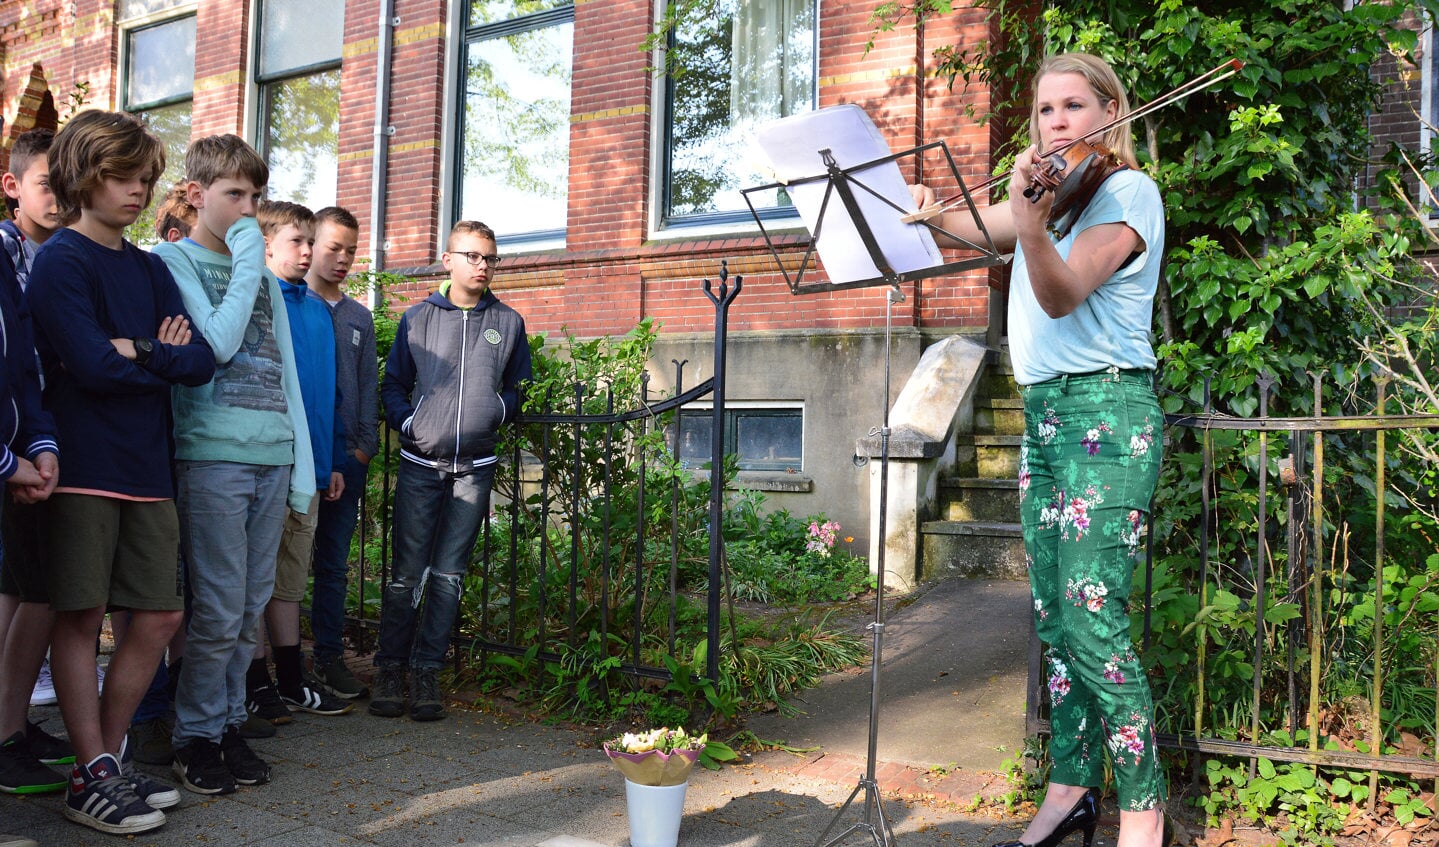 Violiste Esther Würstenhoff sluit de ceremonie af met vioolspel. Foto: PR